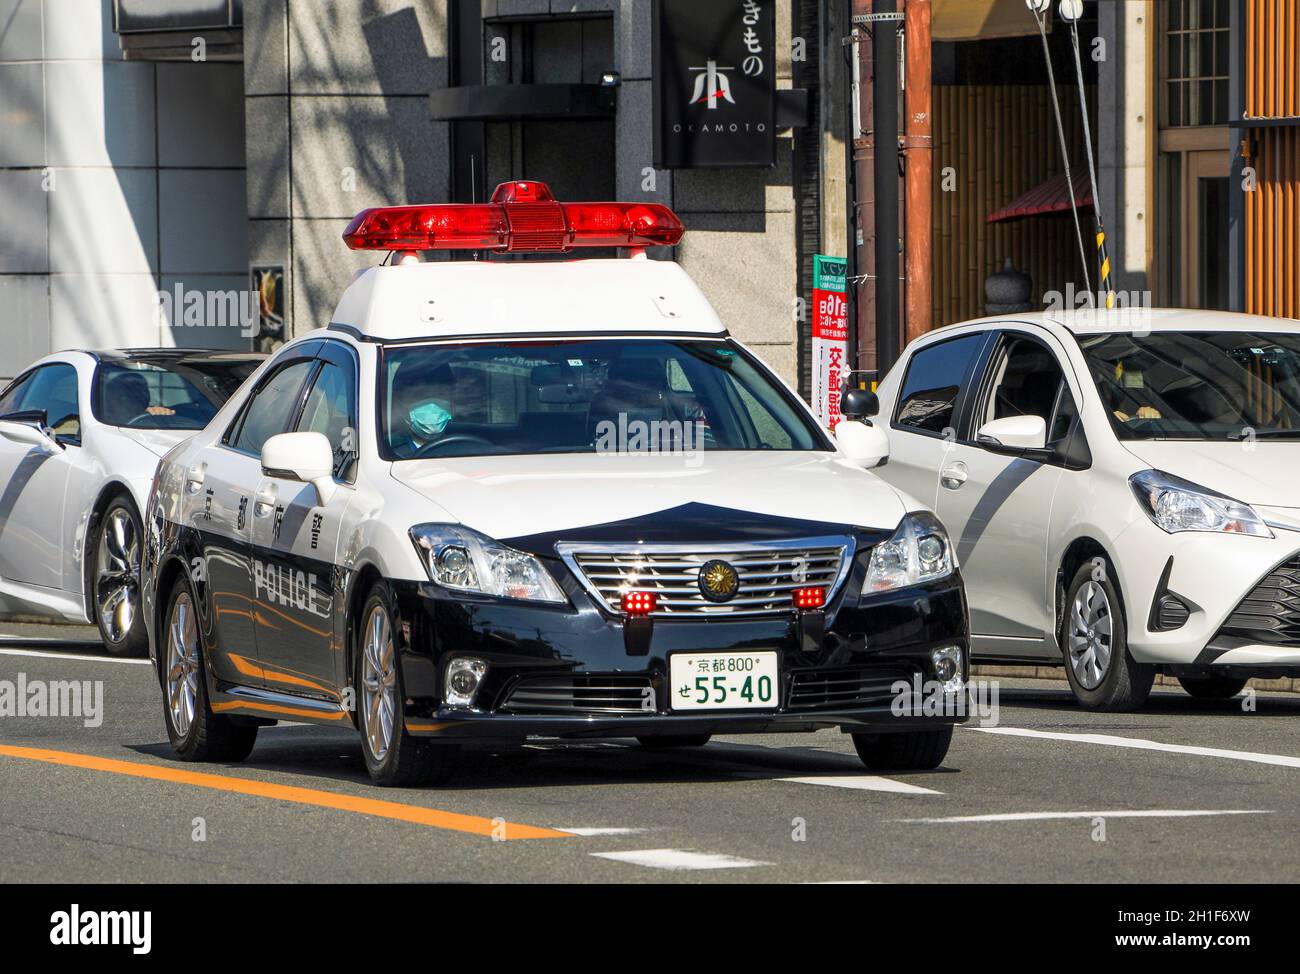 Kyoto, Japan - February 13, 2020: Japanese police patrol car on the street in Kyoto, Japan Stock Photo